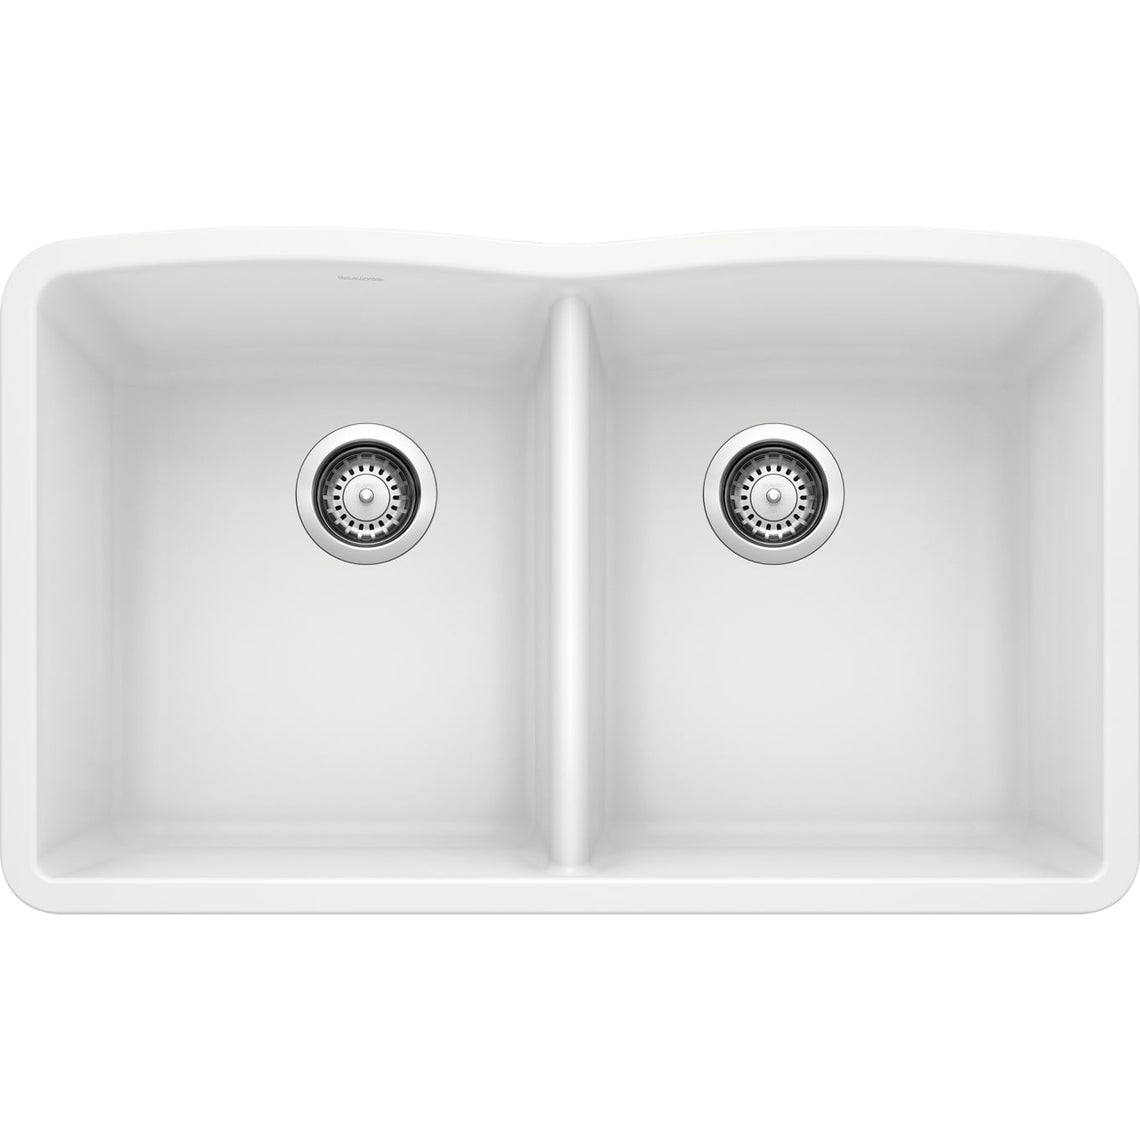 32 inch Double Bowl Kitchen Sink - Undermount Double Basin